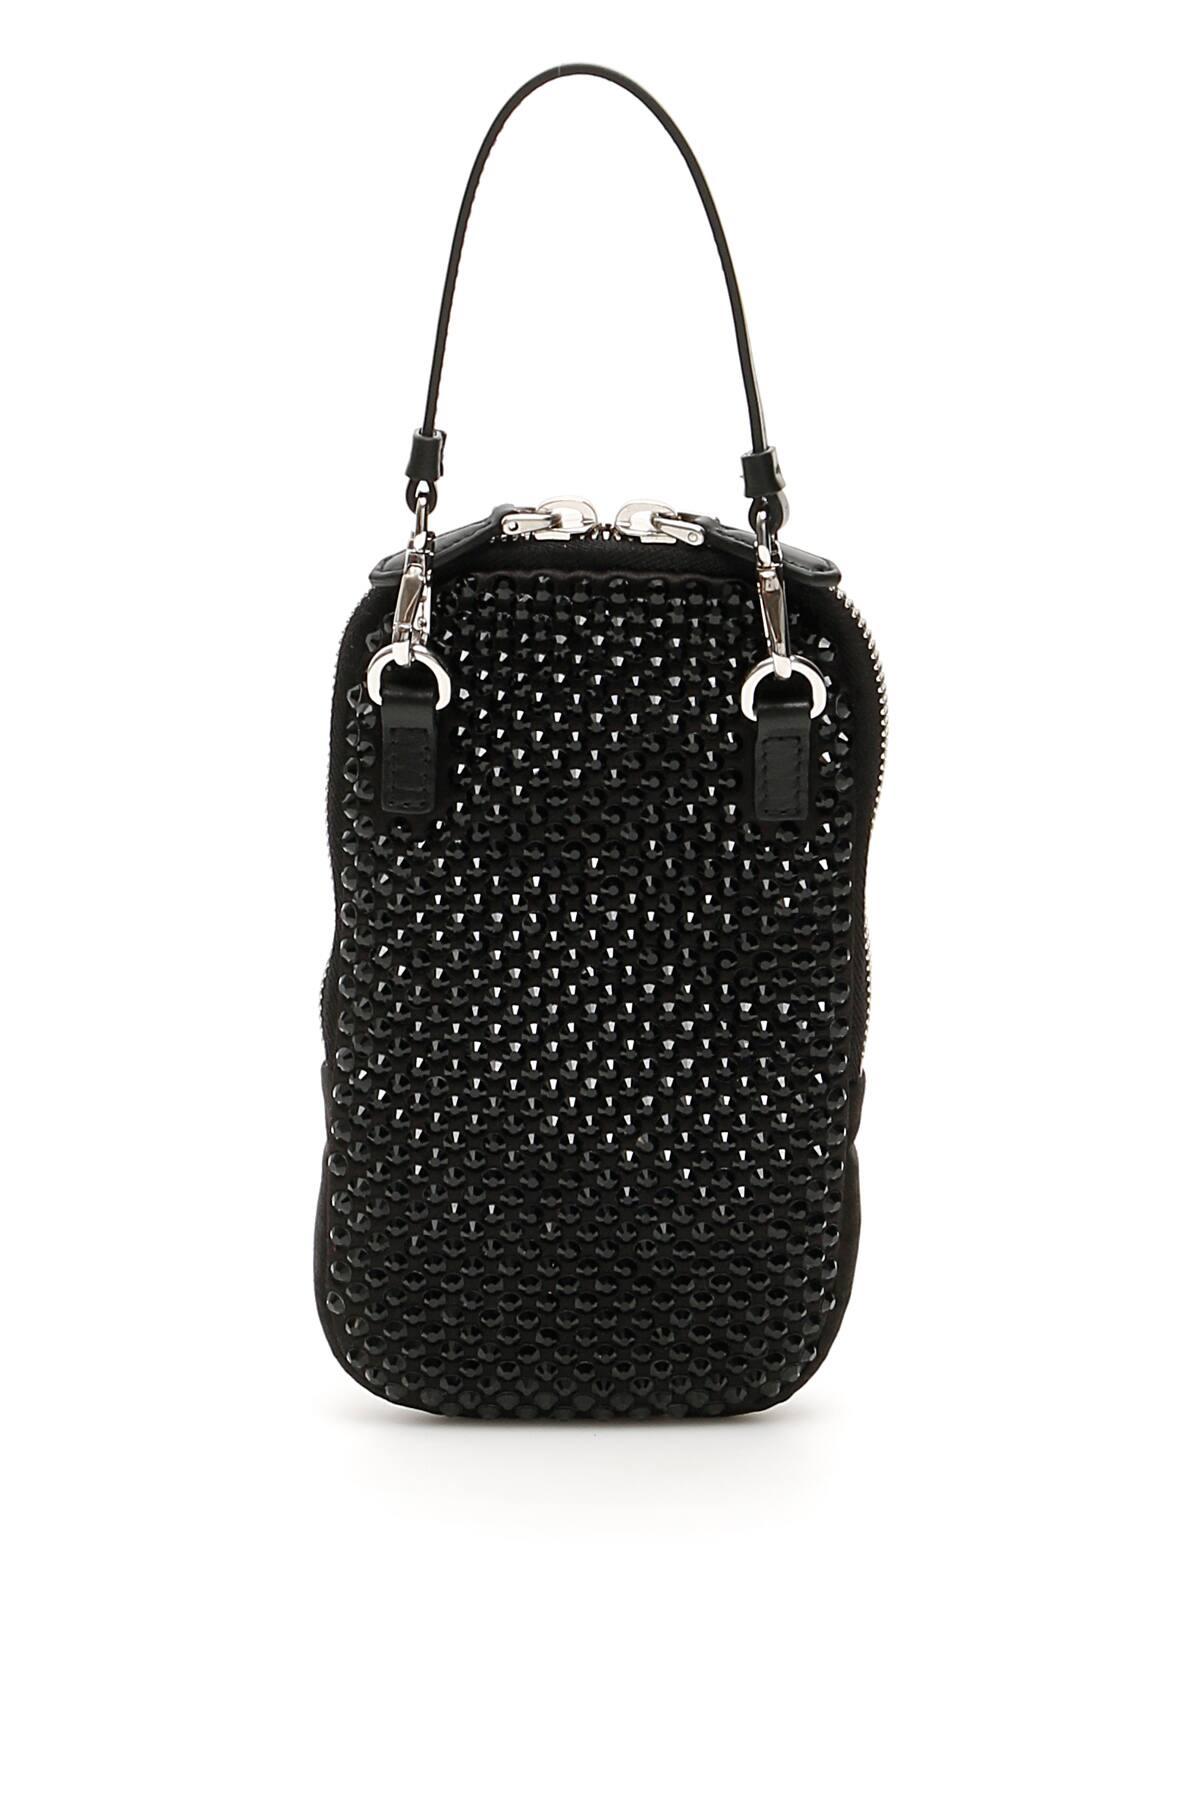 Prada Crystal Mini Bag in Black | Lyst